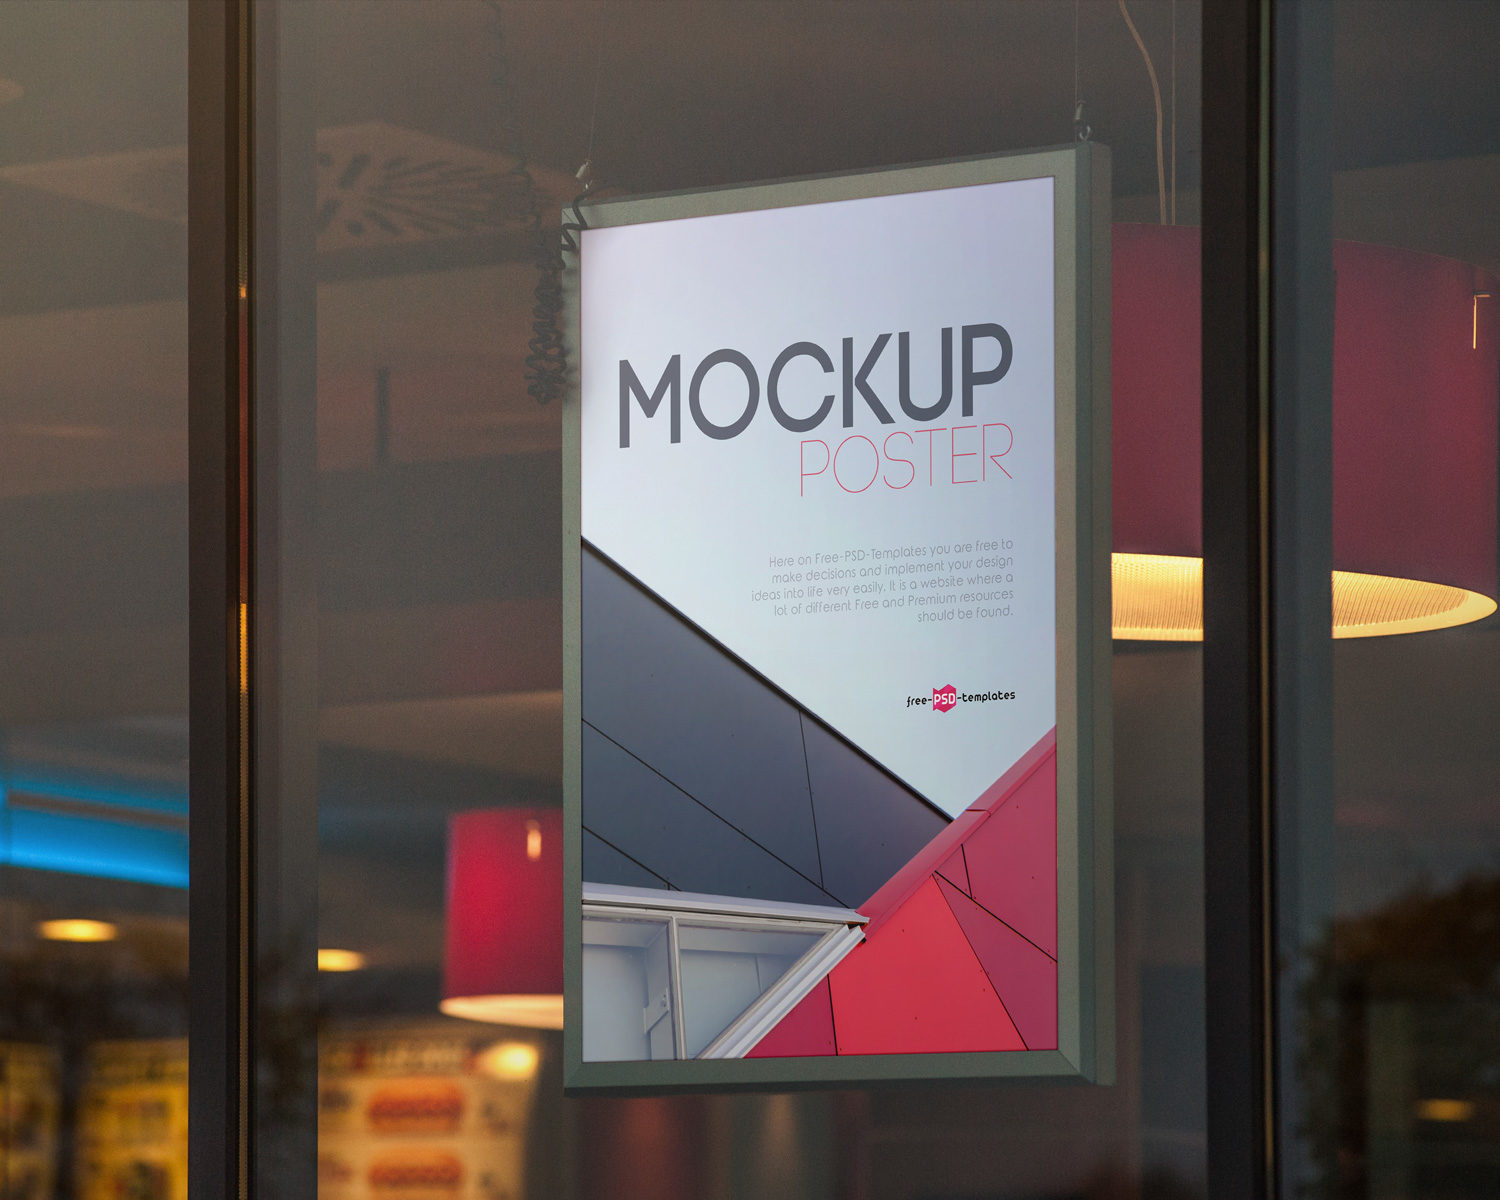 Mockup poster psd free download Idea